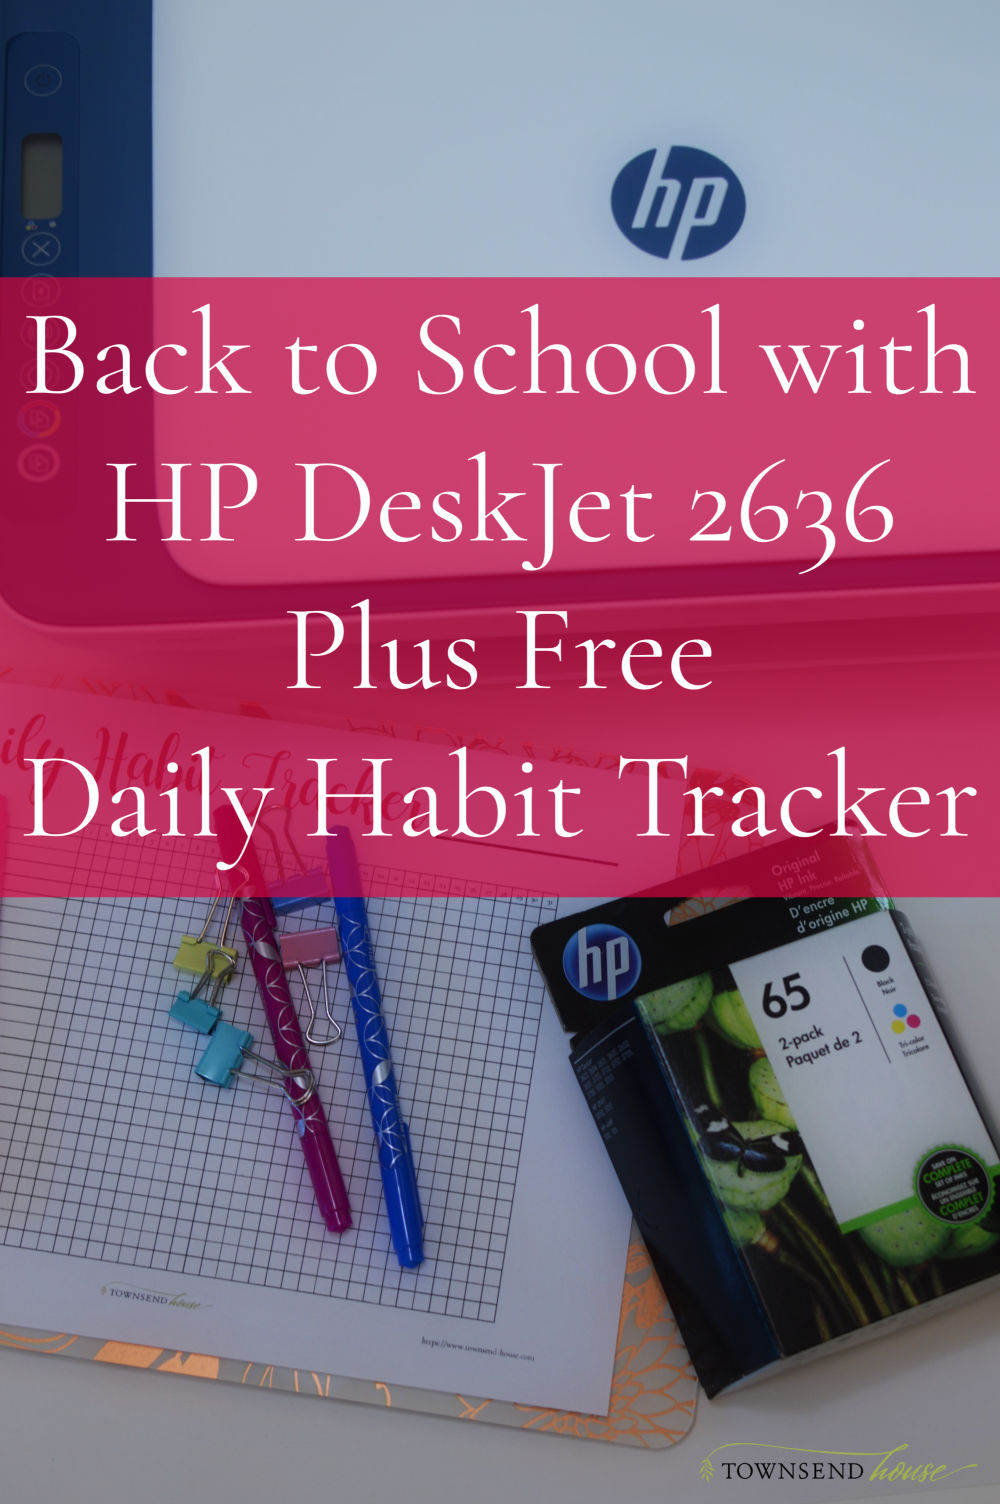 Back to School with HP DeskJet 2636